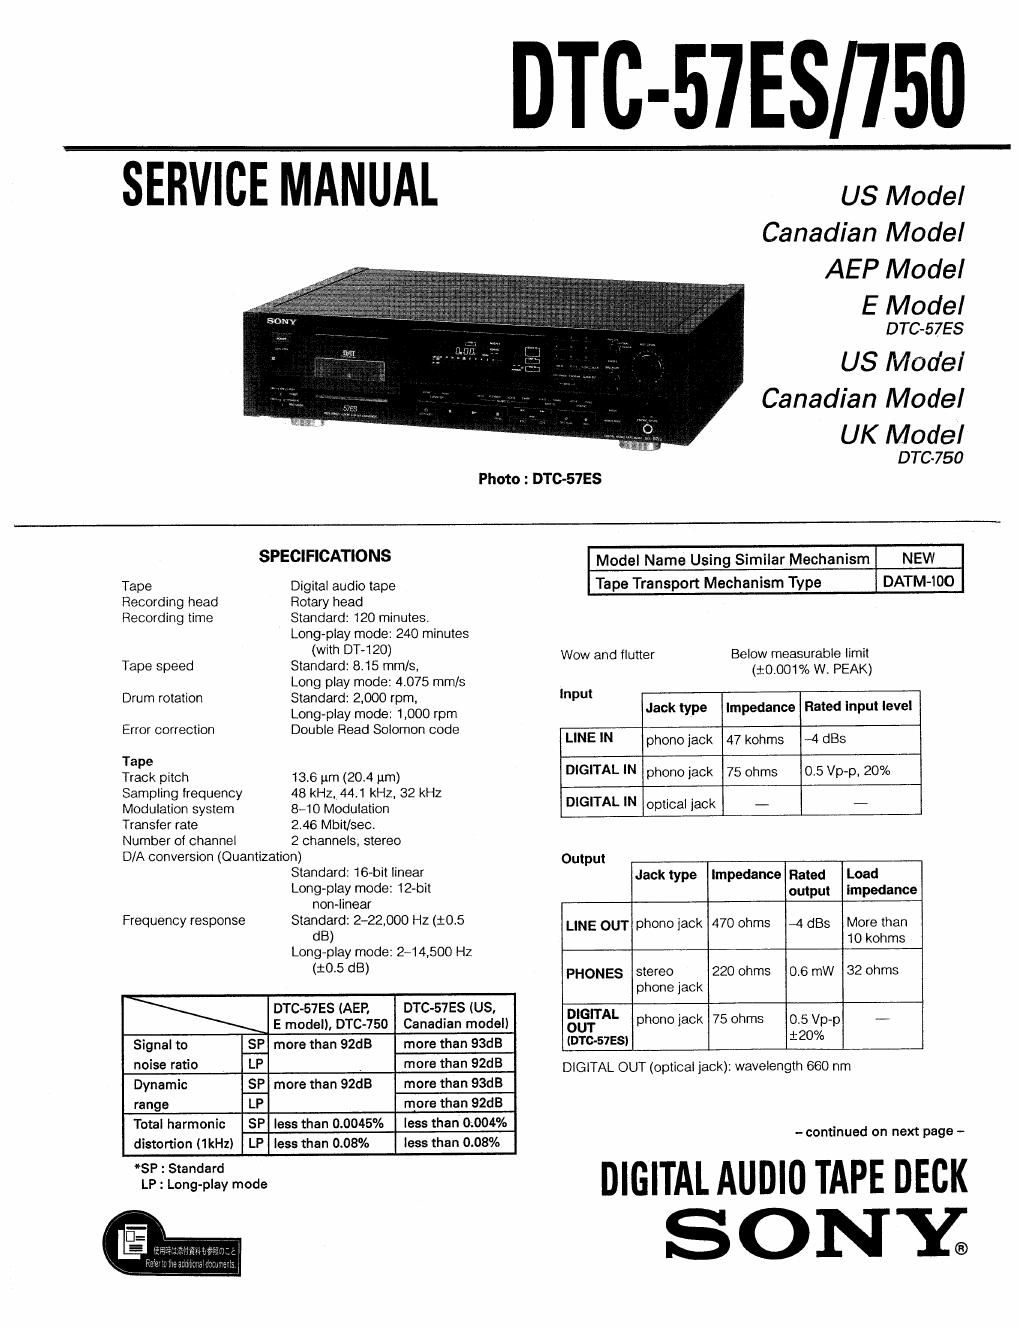 sony dtc 57 es service manual